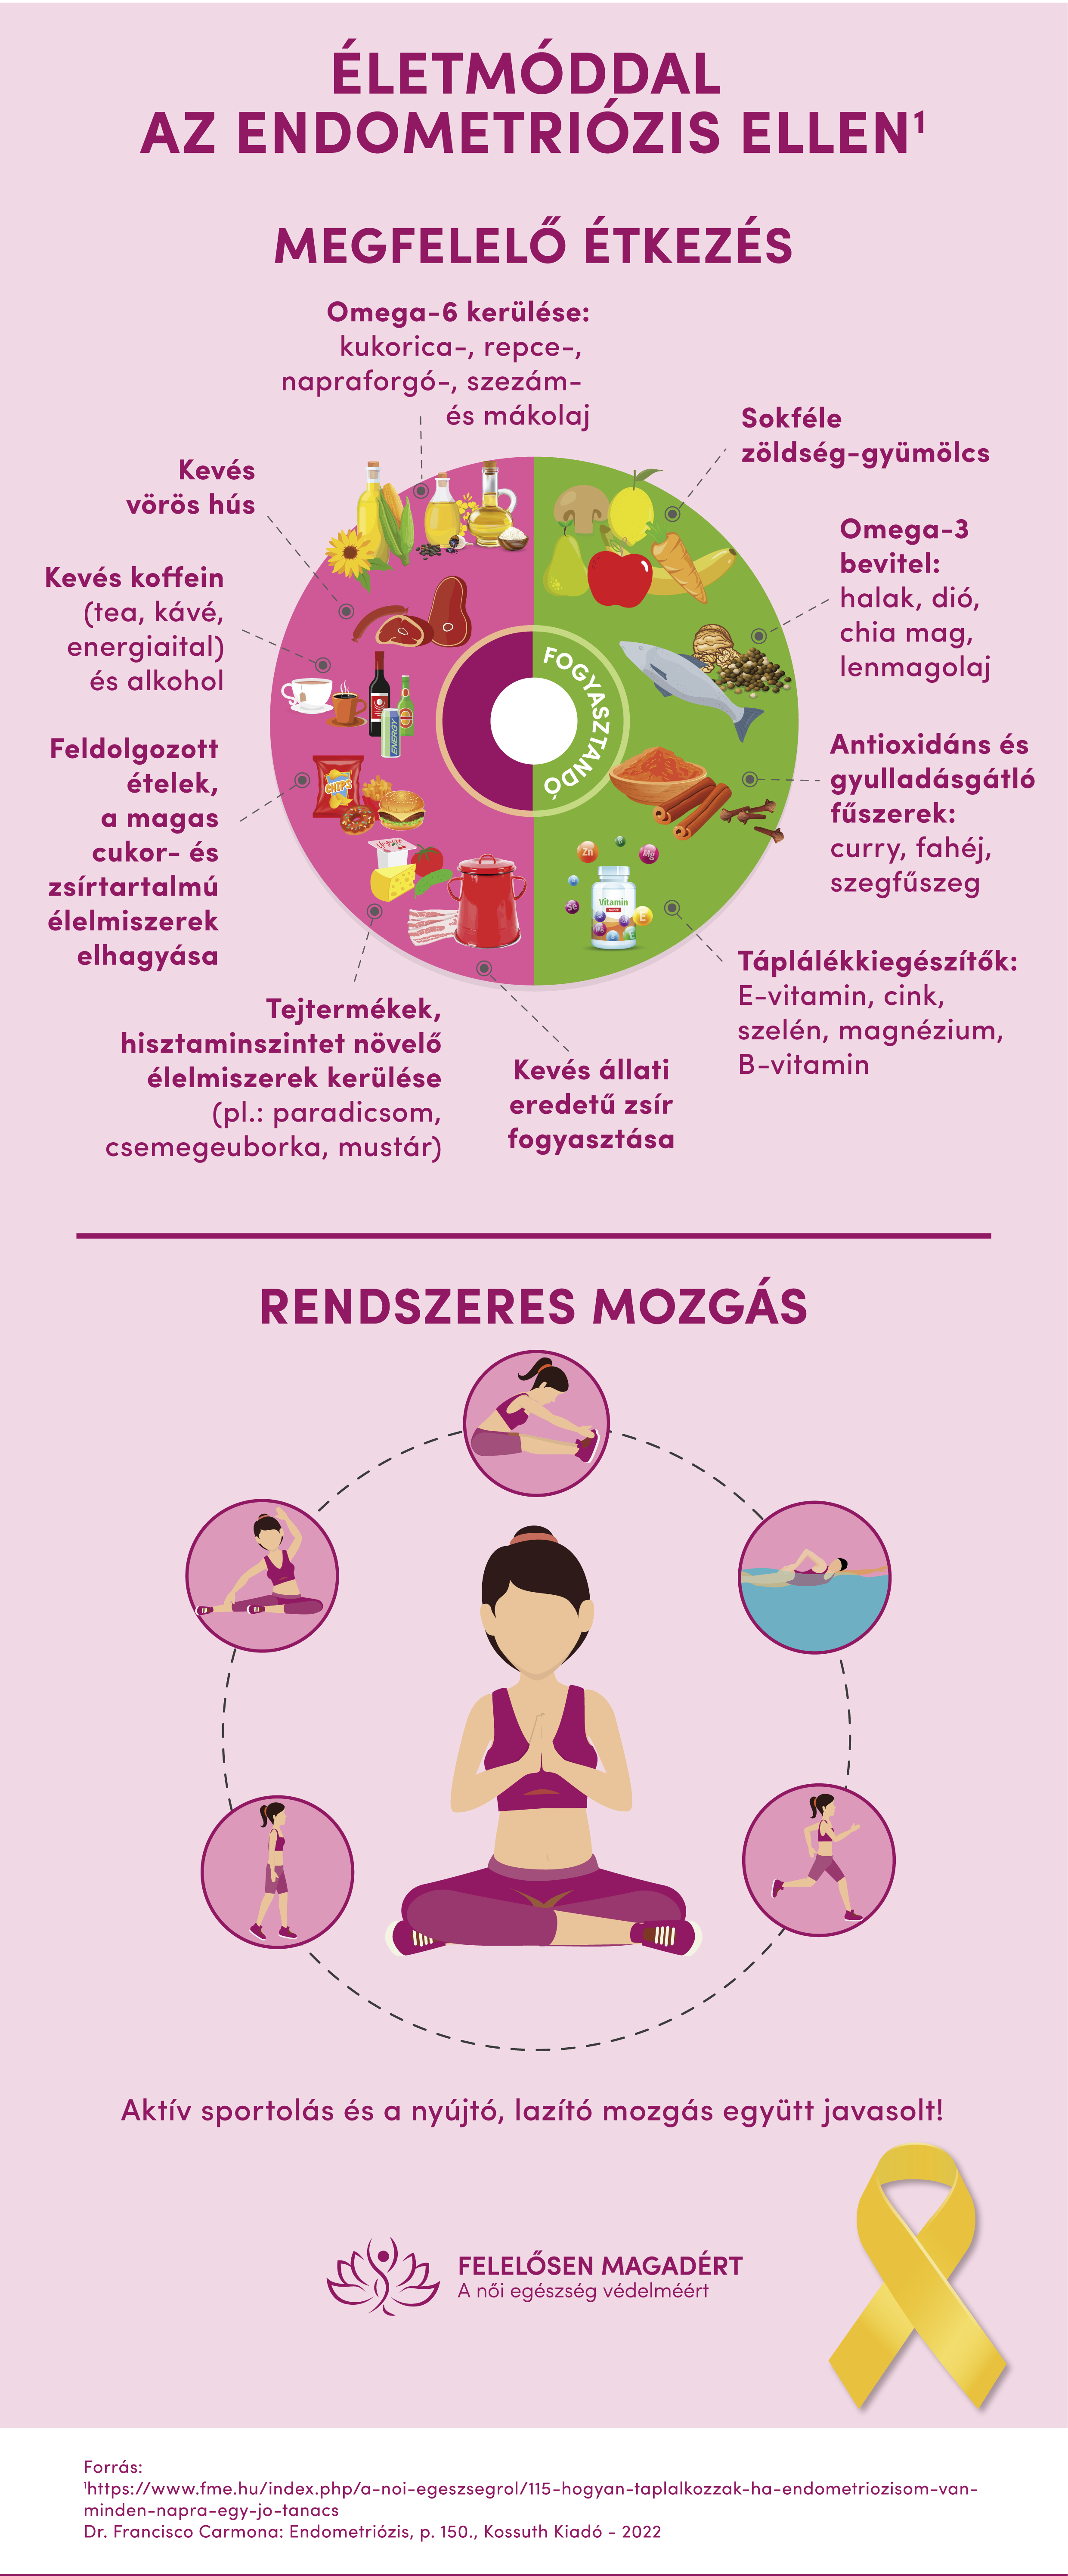 FEME Endometriozis infografika 231006 11